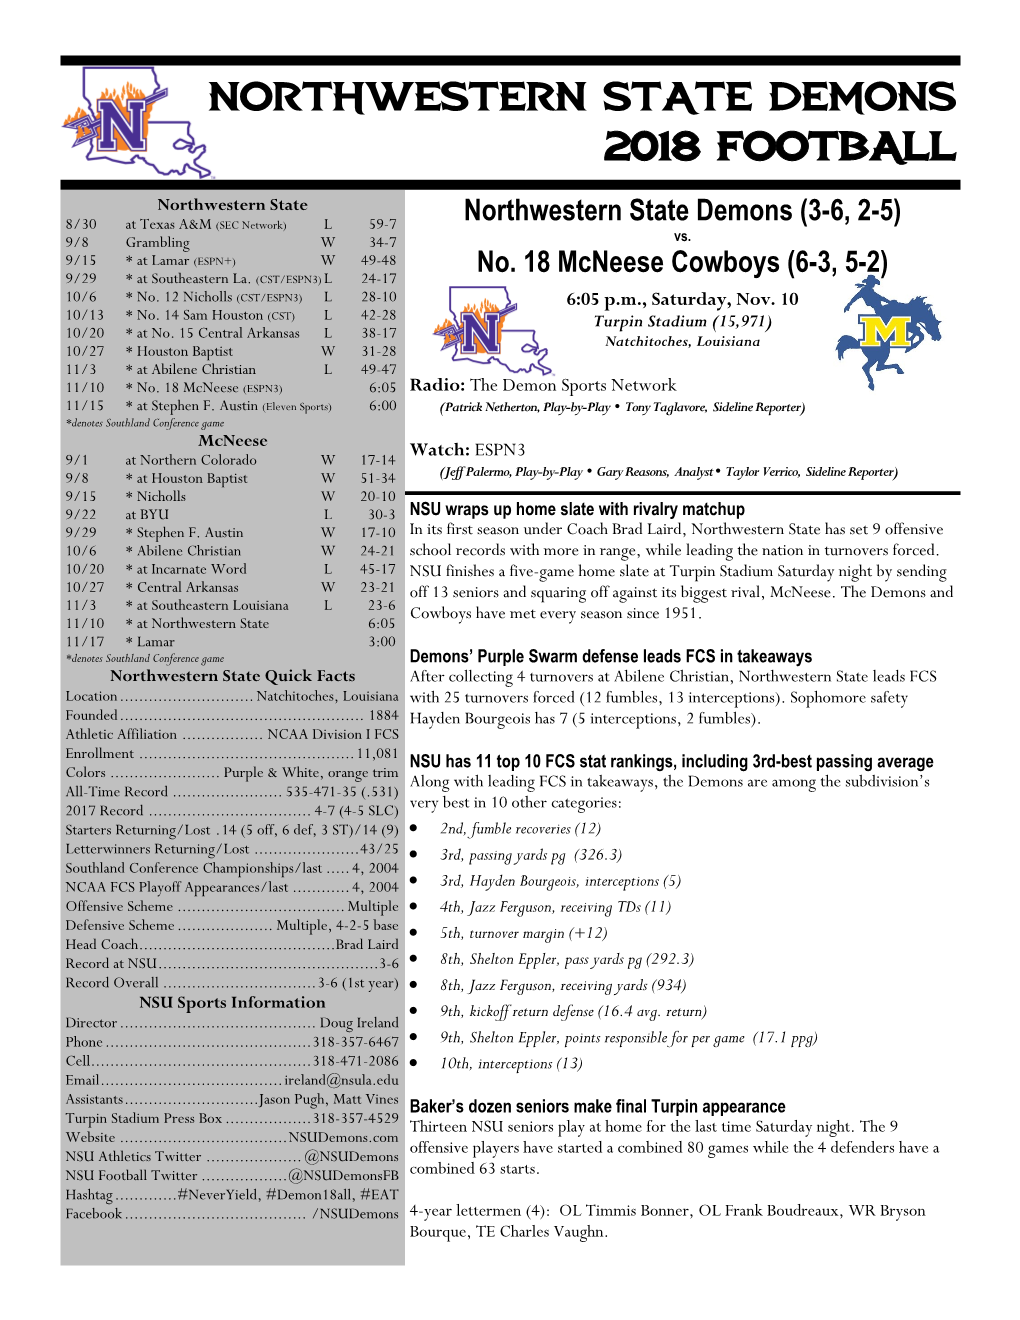 NORTHWESTERN STATE Demons 2018 FOOTBALL Northwestern State Northwestern State Demons (3-6, 2-5) 8/30 at Texas A&M (SEC Network) L 59-7 9/8 Grambling W 34-7 Vs